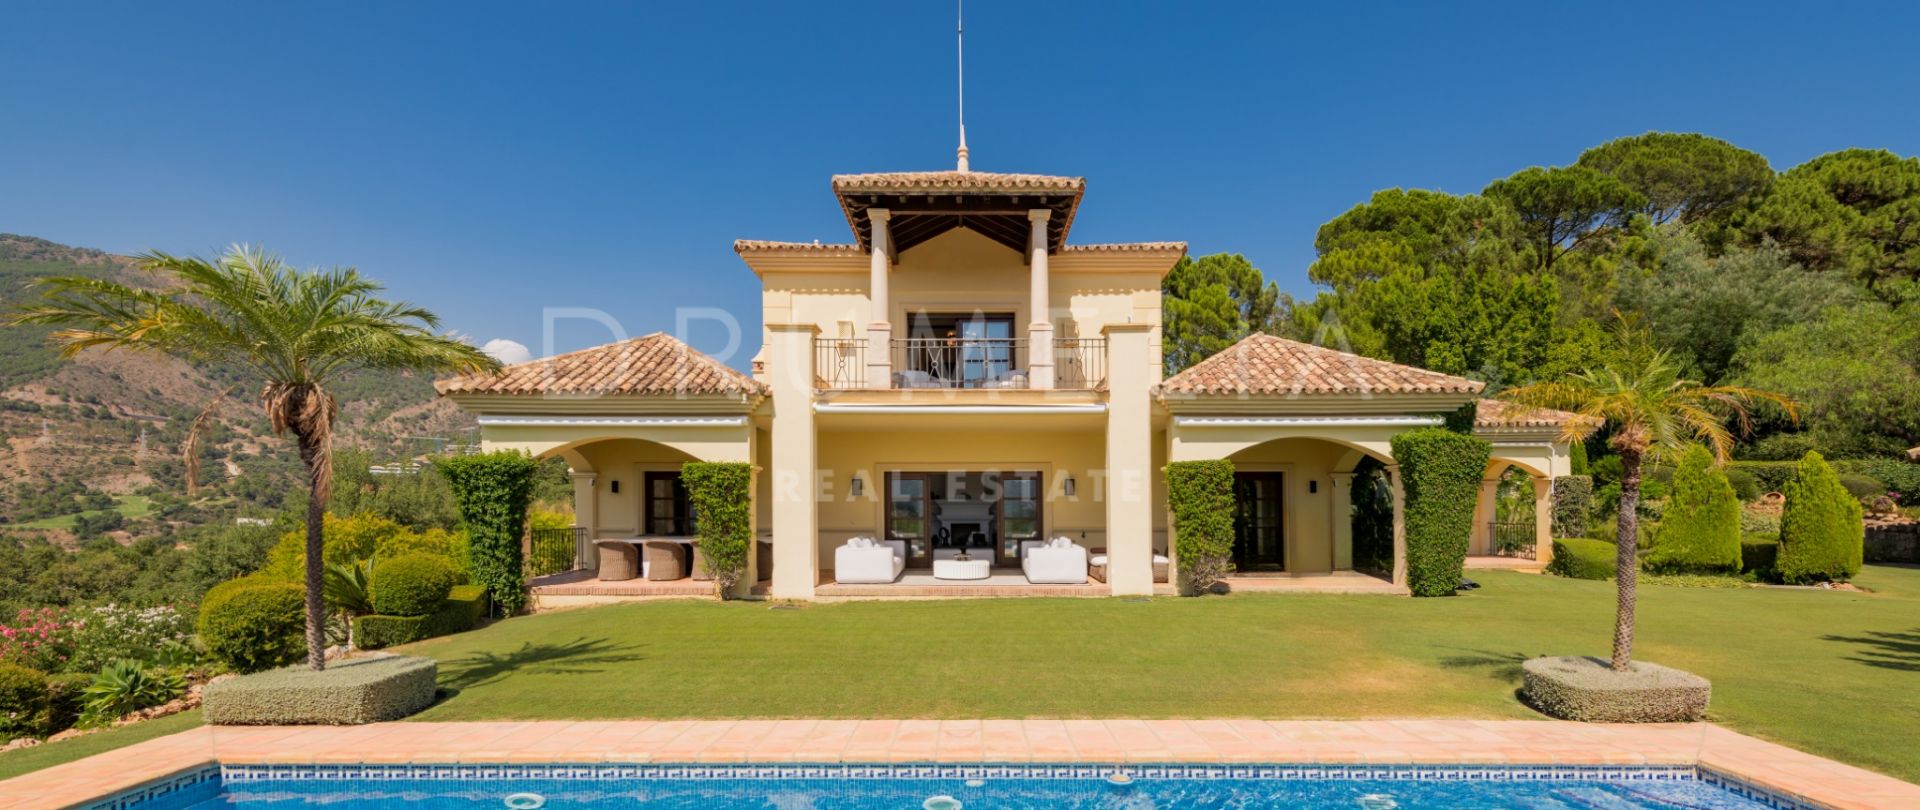 Beautiful Mediterranean-style luxury villa in the heart of privileged La Zagaleta, Benahavis